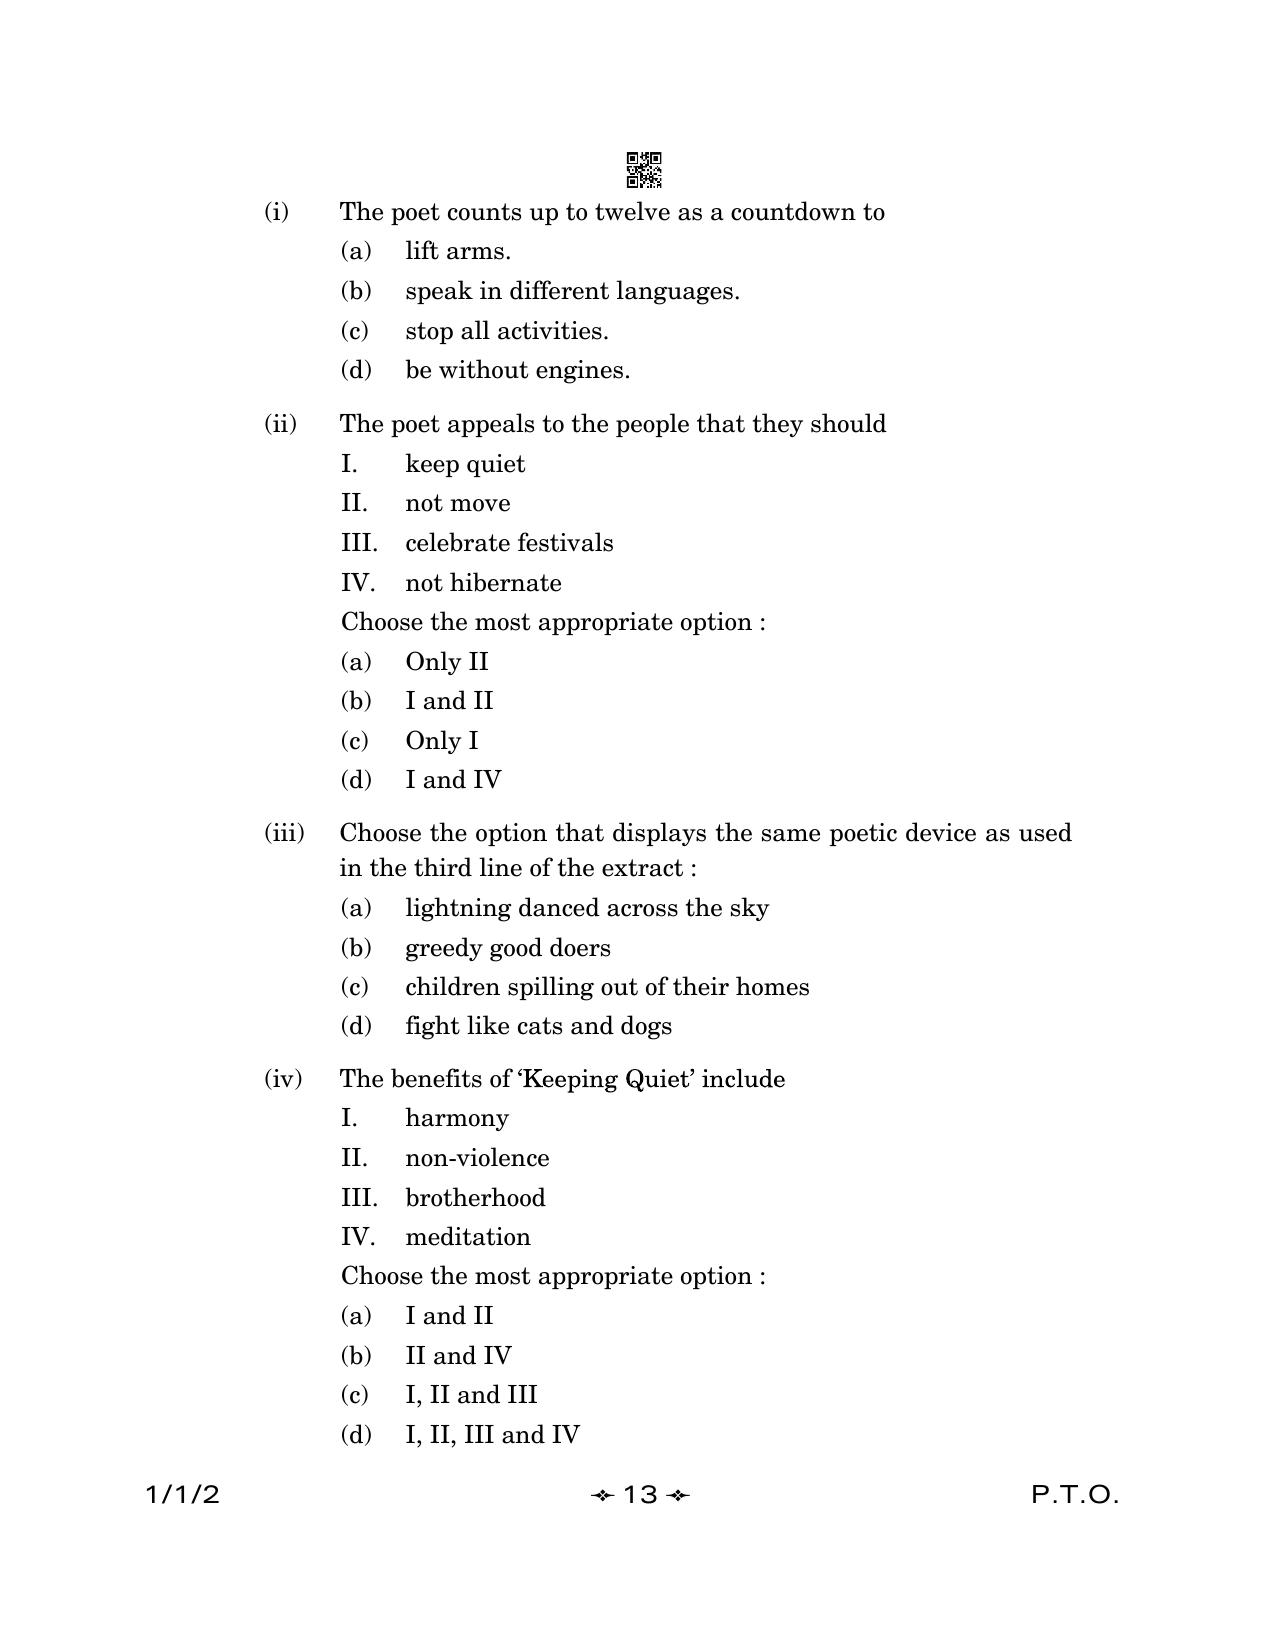 CBSE Class 12 1-1-2 English Core 2023 Question Paper - Page 13